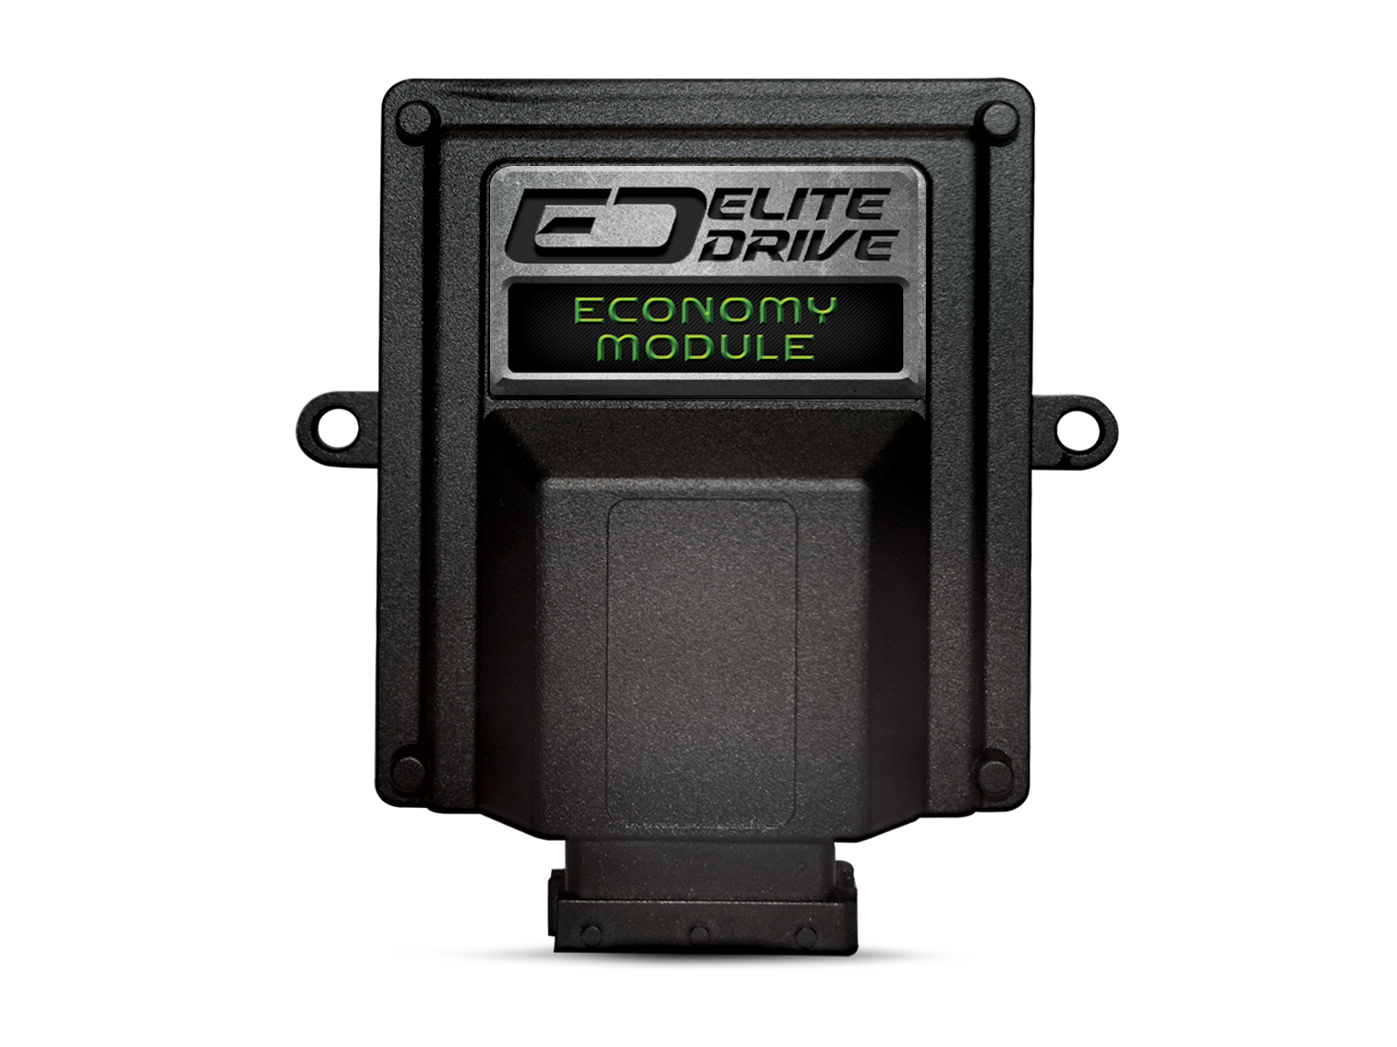 EliteDrive Diesel Economy Power Module suits Isuzu N Series Trucks